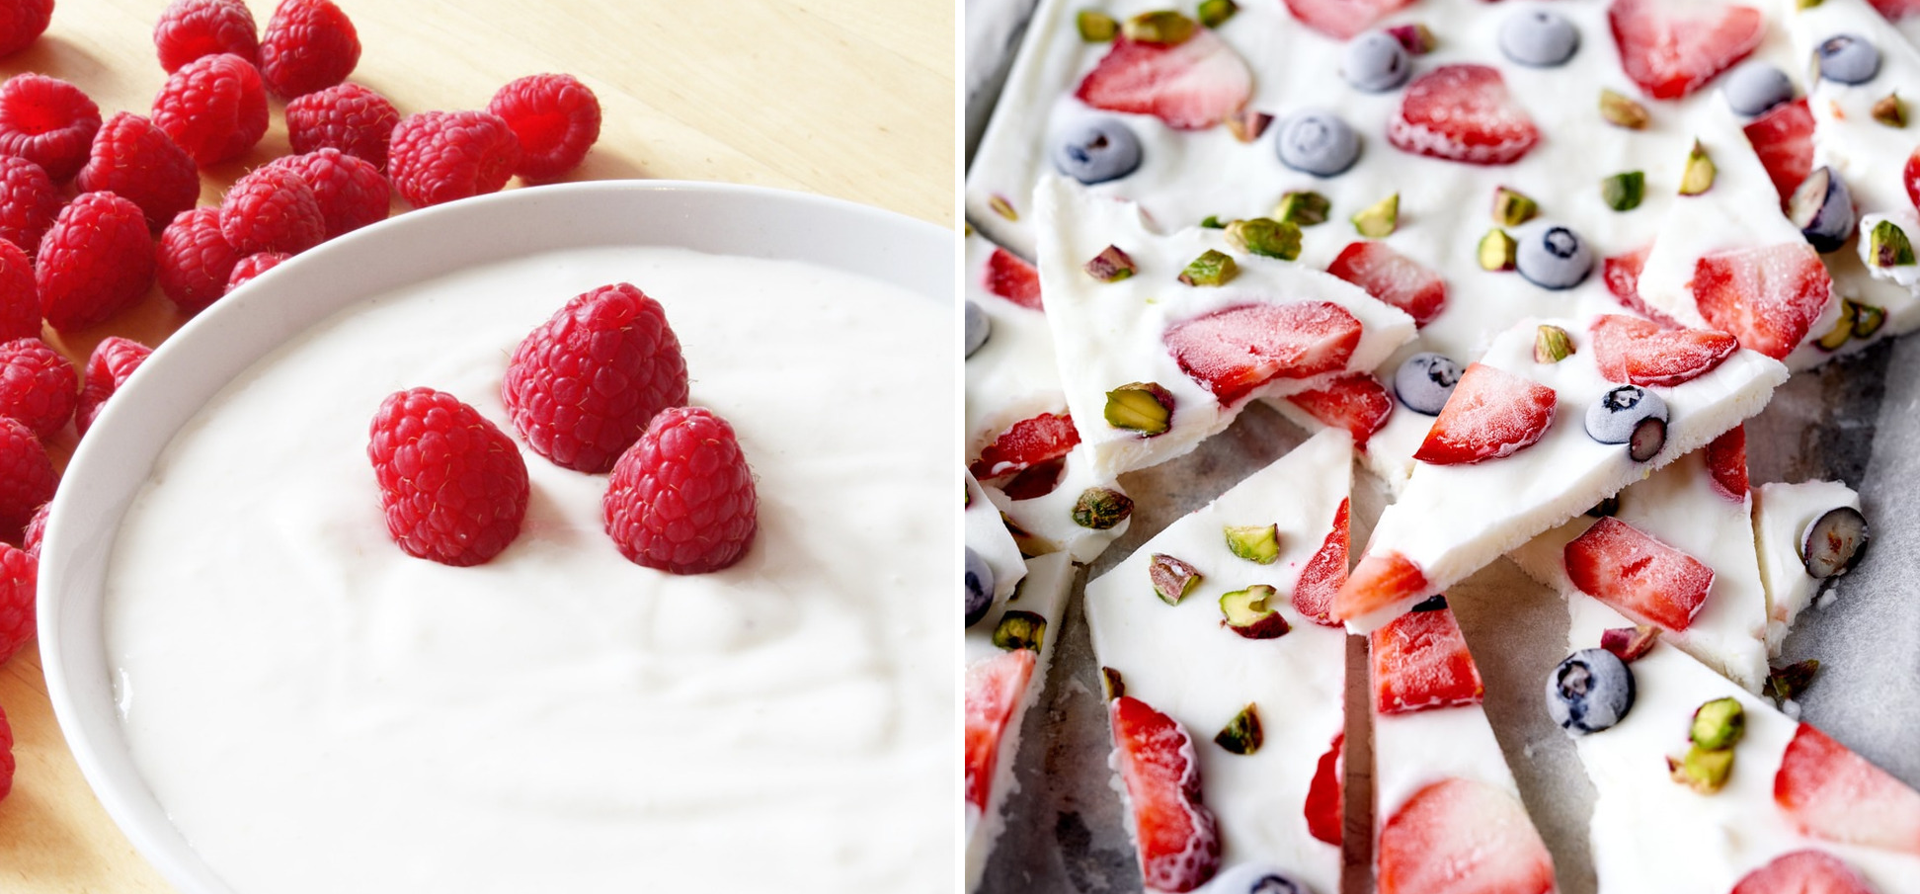 How to make a sugar-free yoghurt dessert